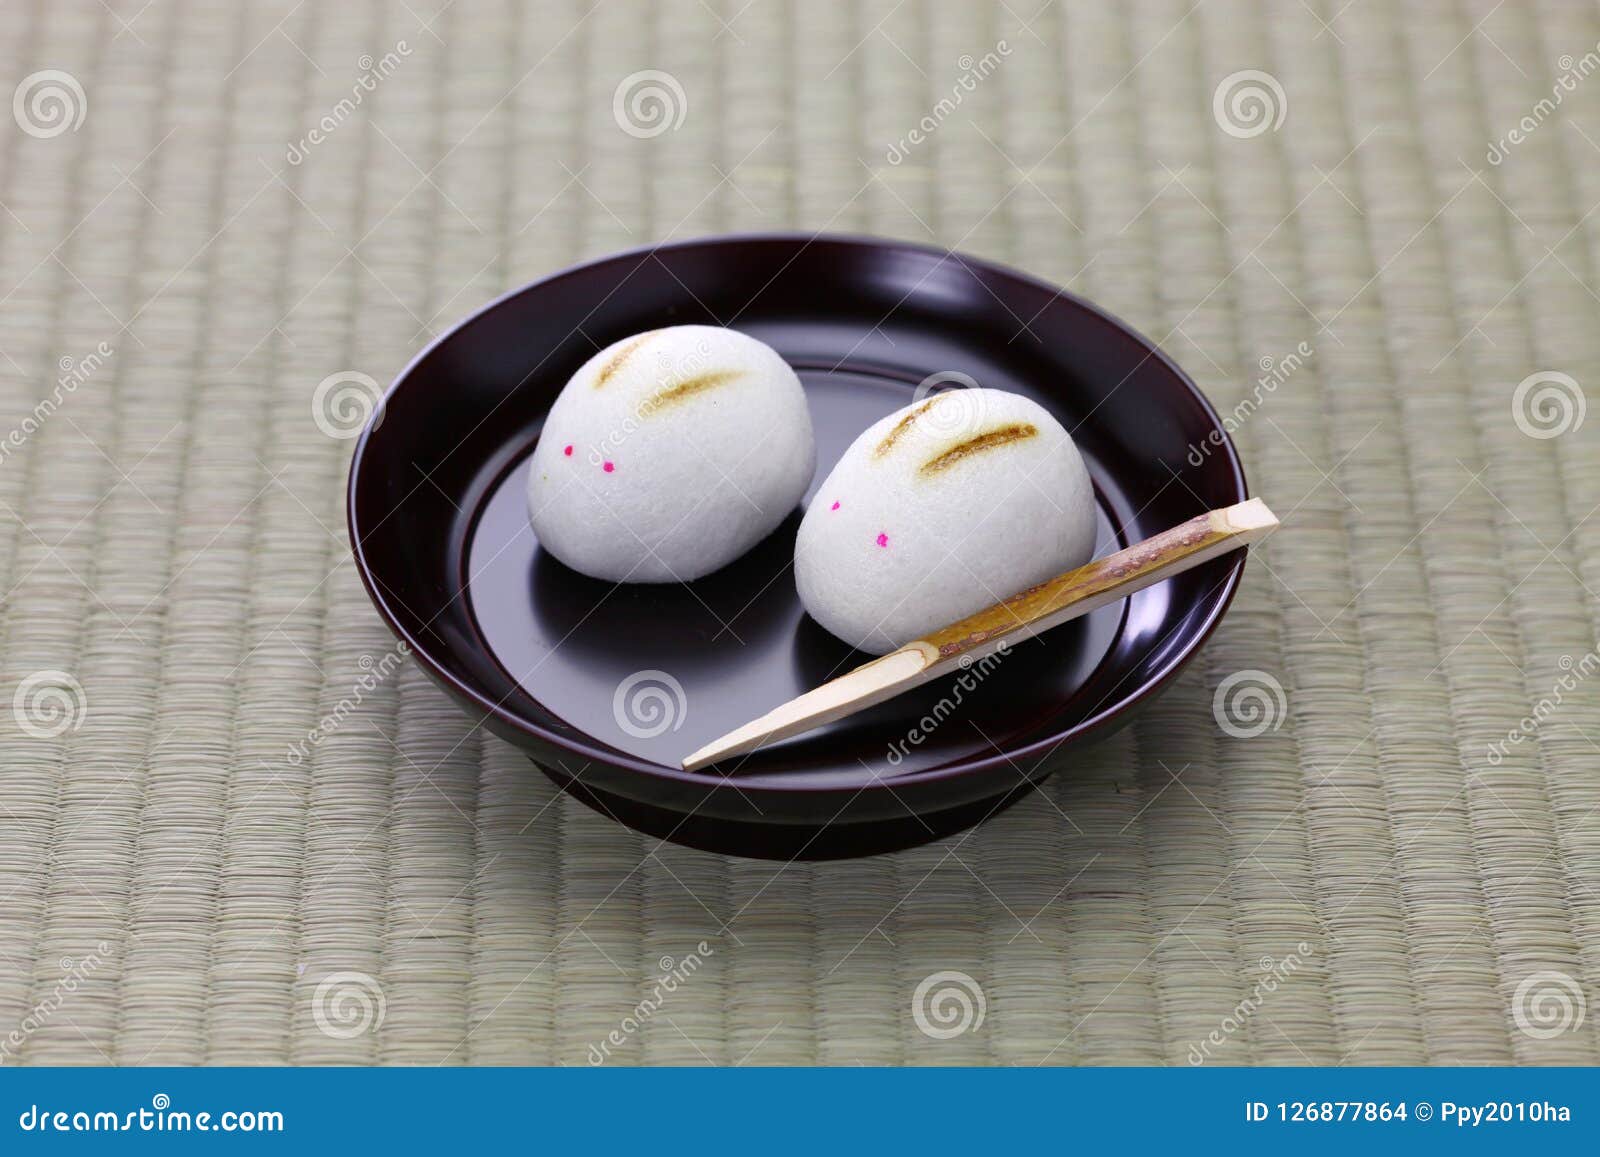 rabbit manju, japanese confection